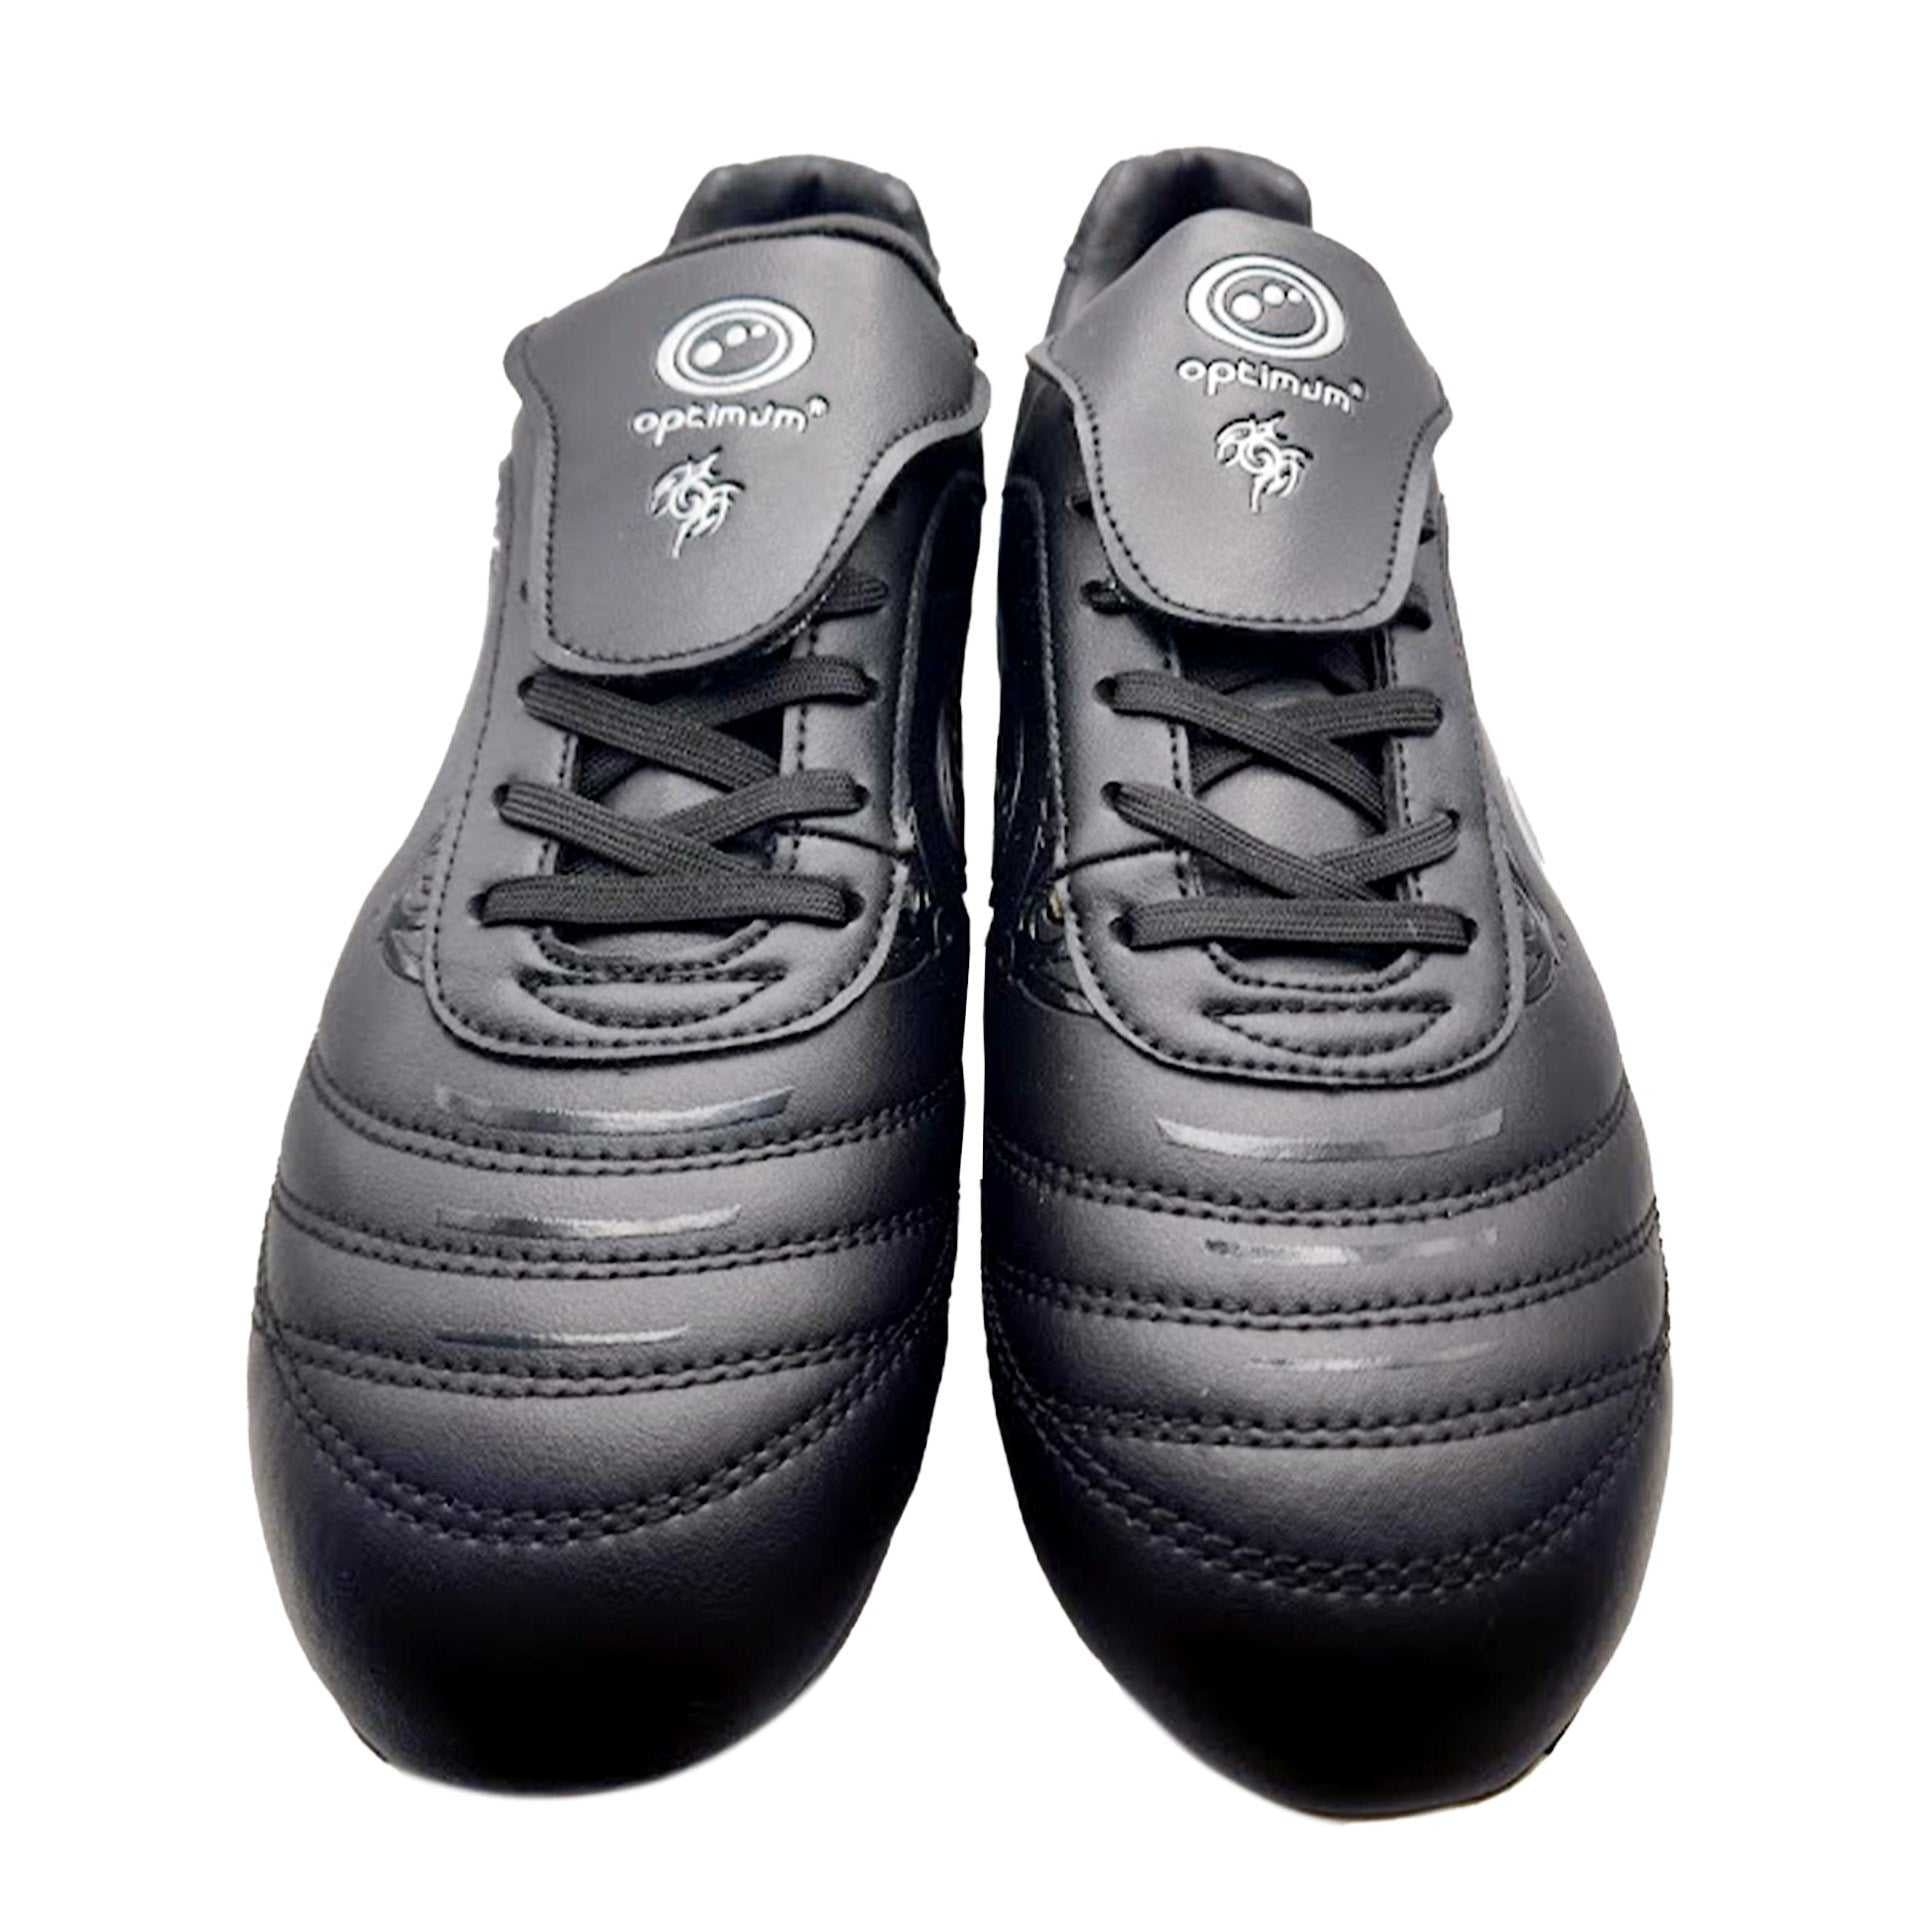 Senior Razor Lace Up 6 Stud Football Boots - Optimum